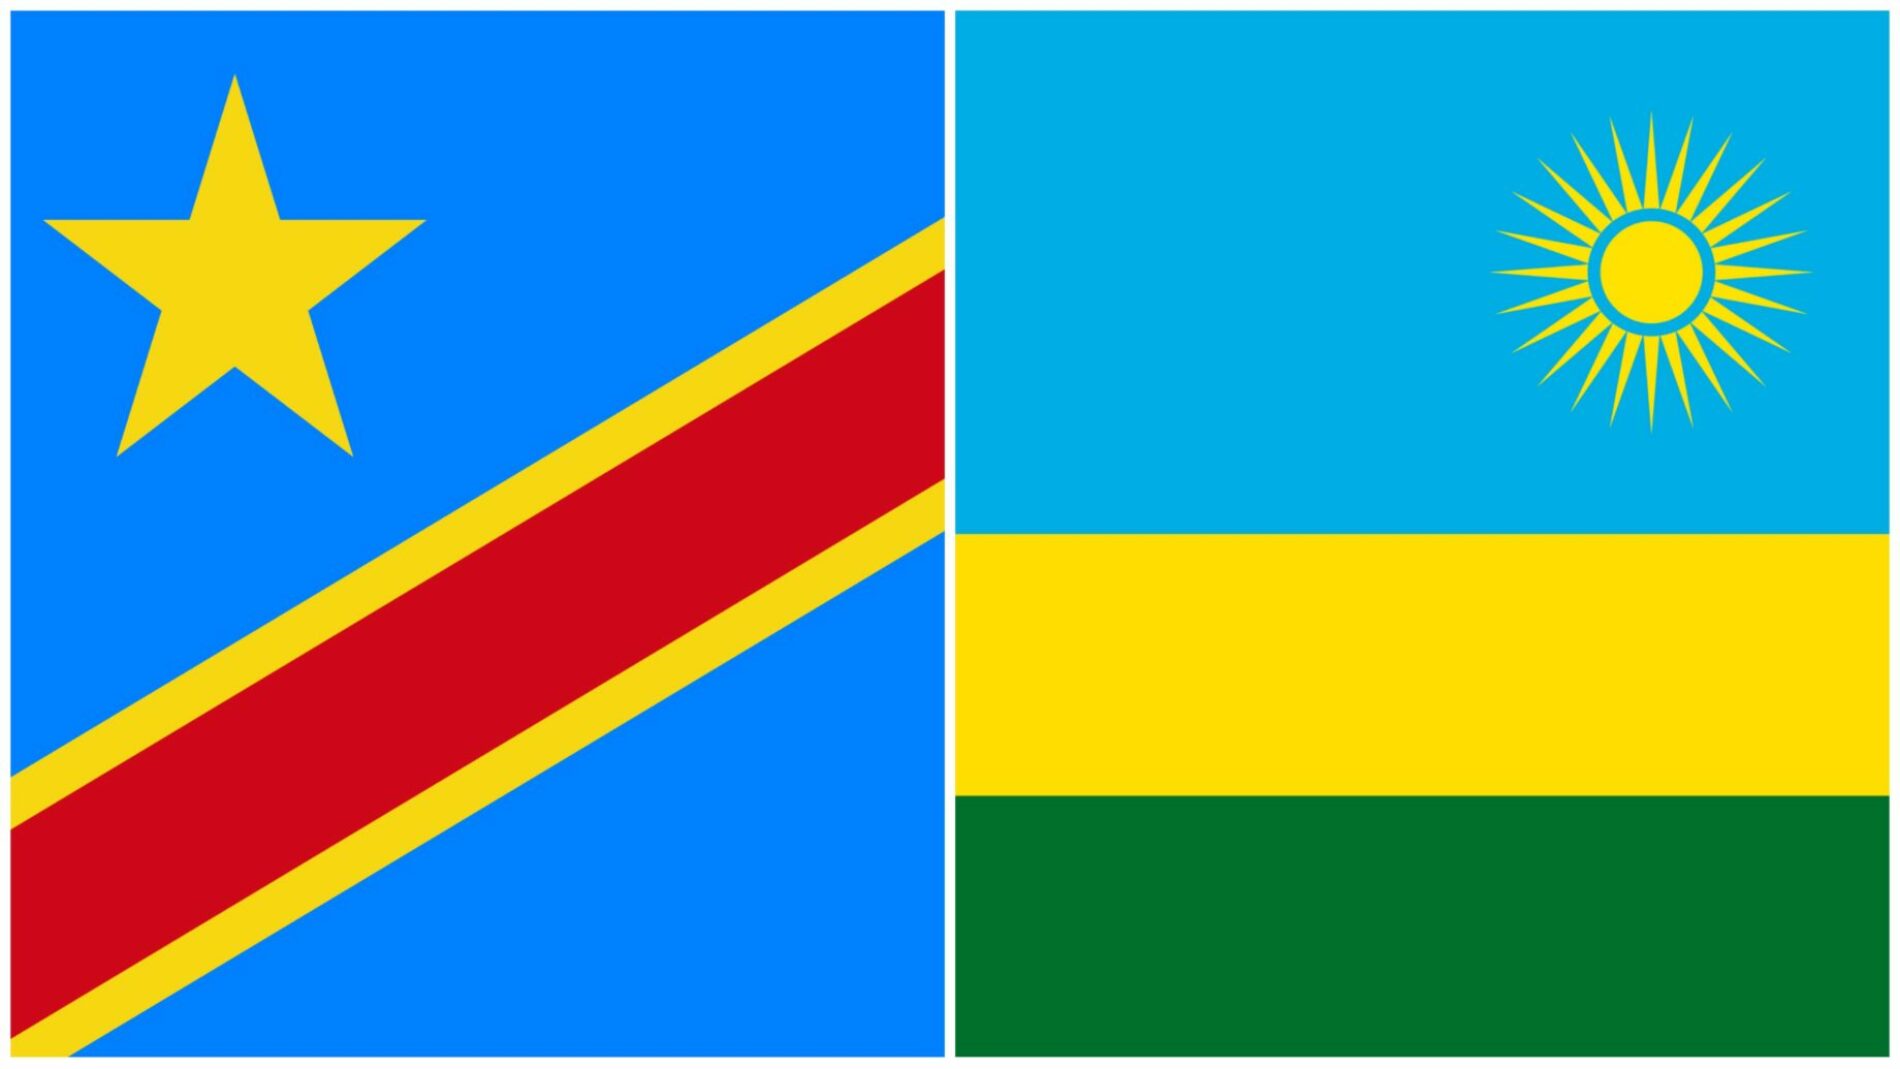 Rwanda-DRC: Congolese fighter plane once again violated Rwandan airspace